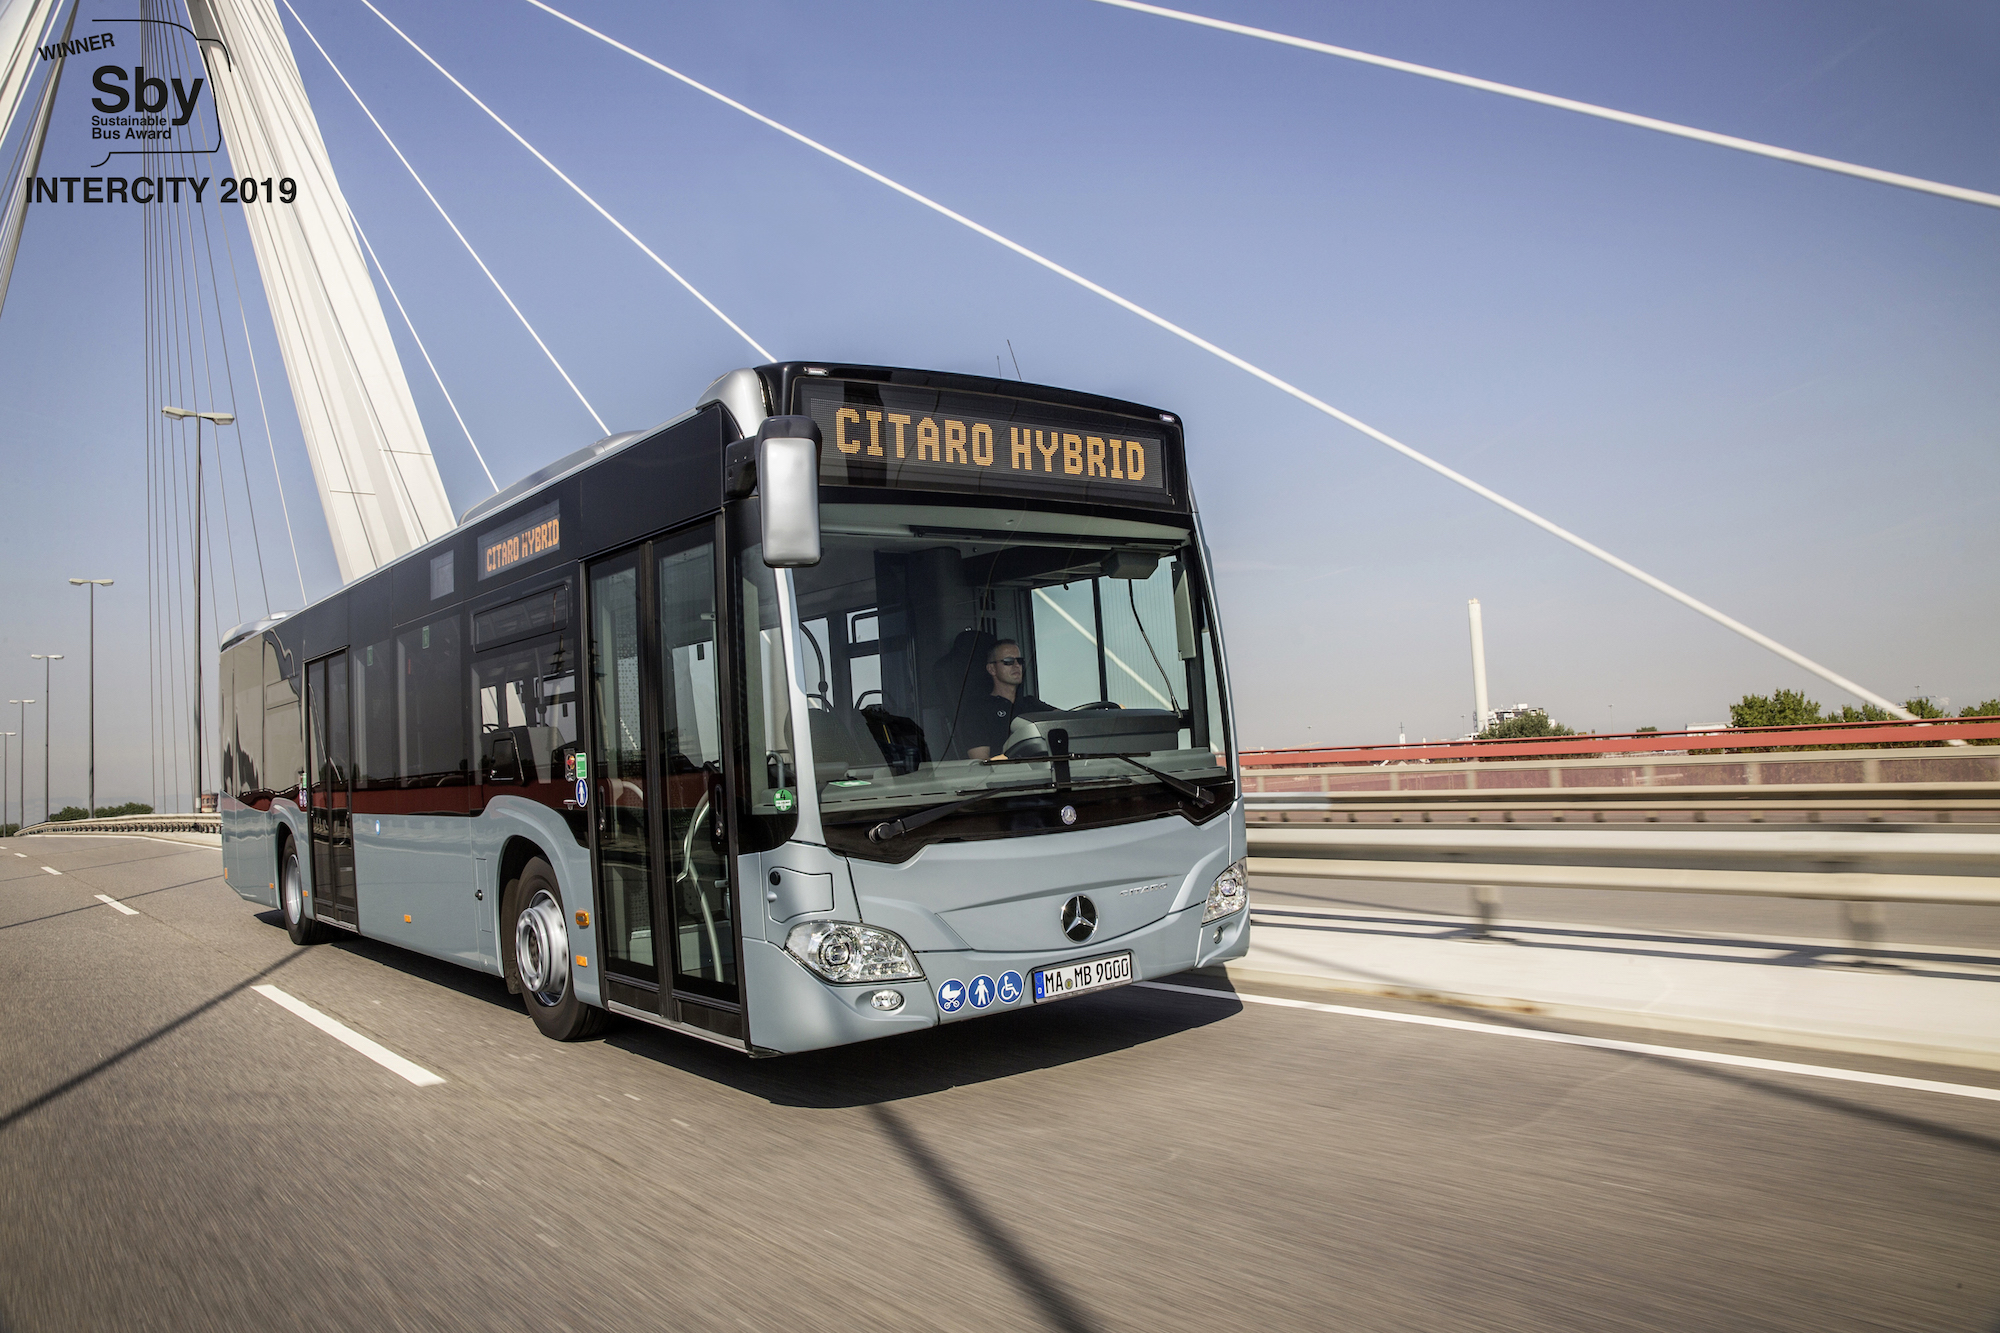 Mercedes-Benz Citaro U Hybrid vince il Sustainable Bus Award 2019.nella categoria Intecity